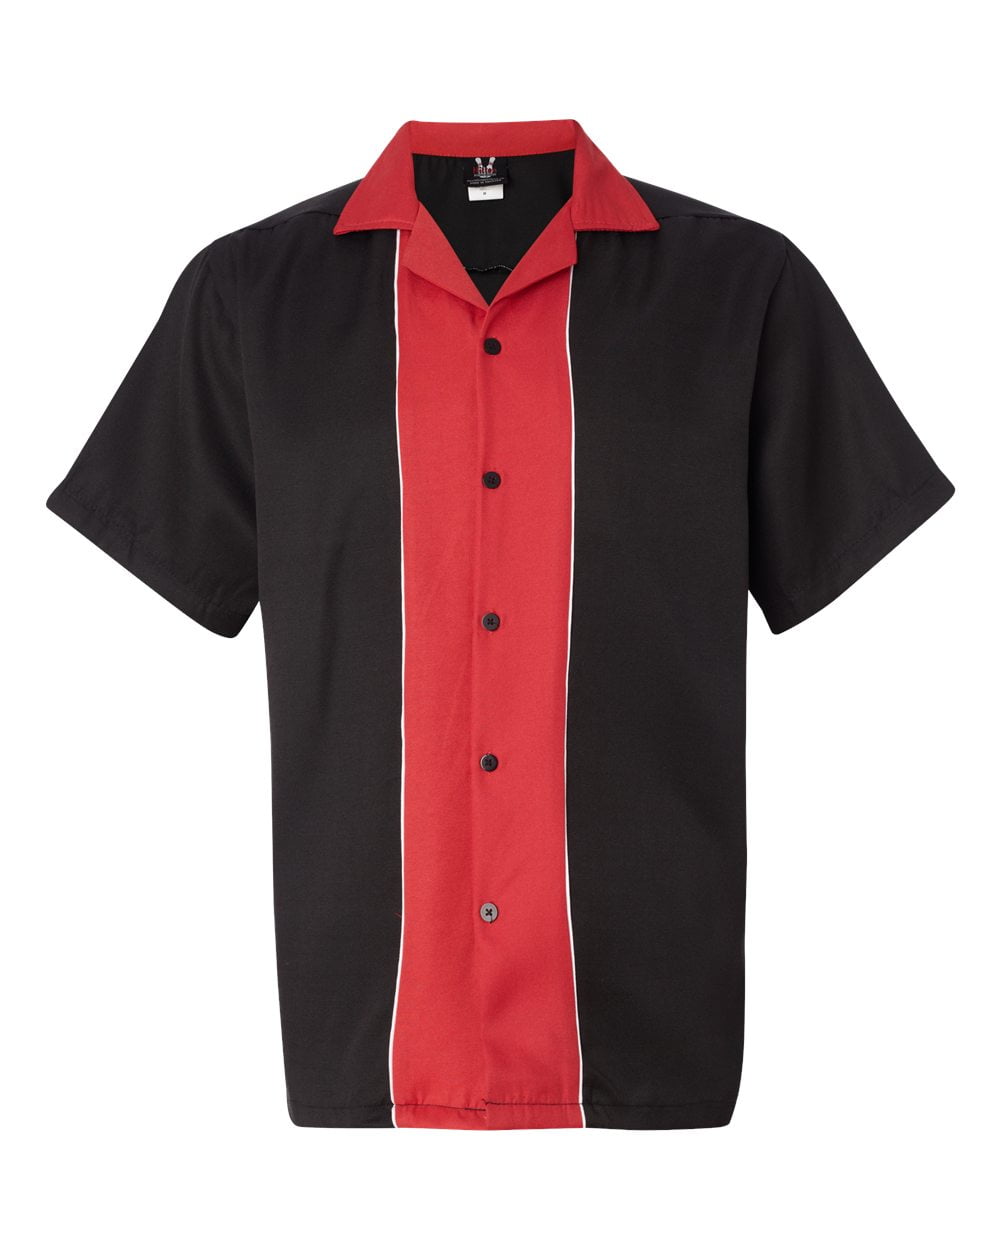 Hilton - Hilton Quest Bowling Shirt HP2246 Black/ Red XL - Walmart.com ...